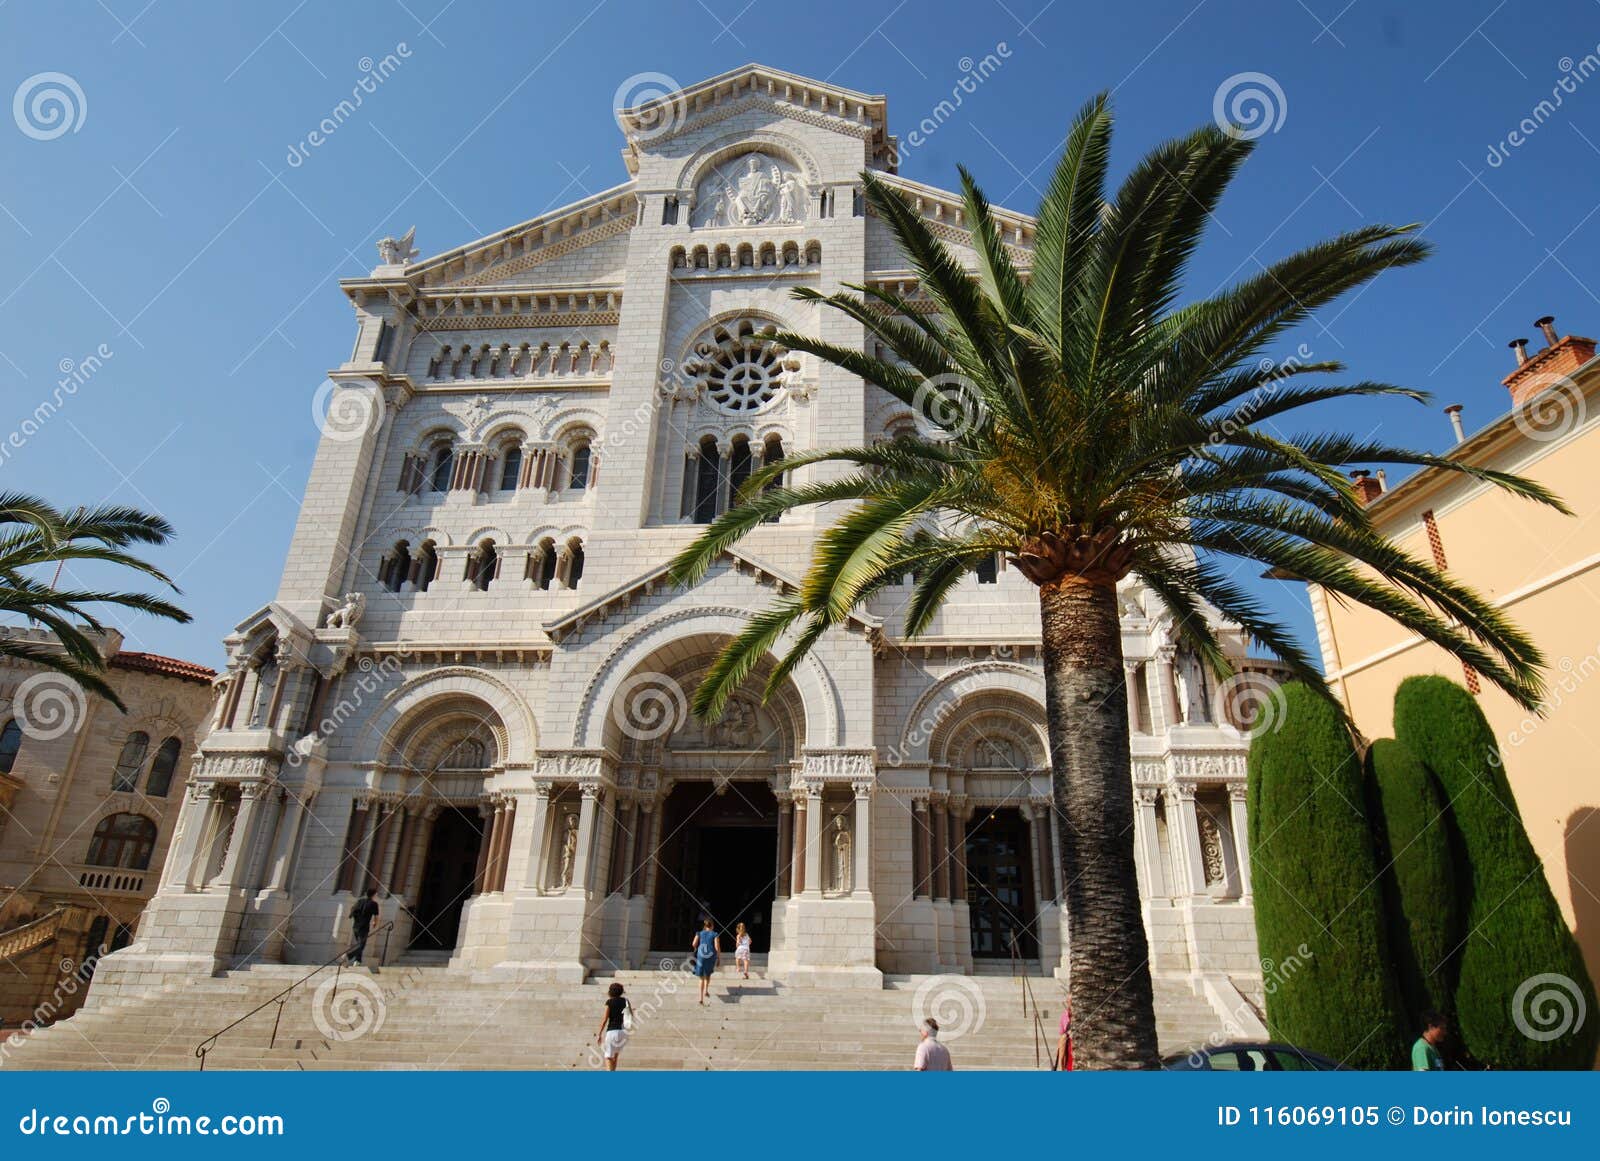 saint nicholas cathedral, monaco, palm tree, arecales, historic site, tourist attraction